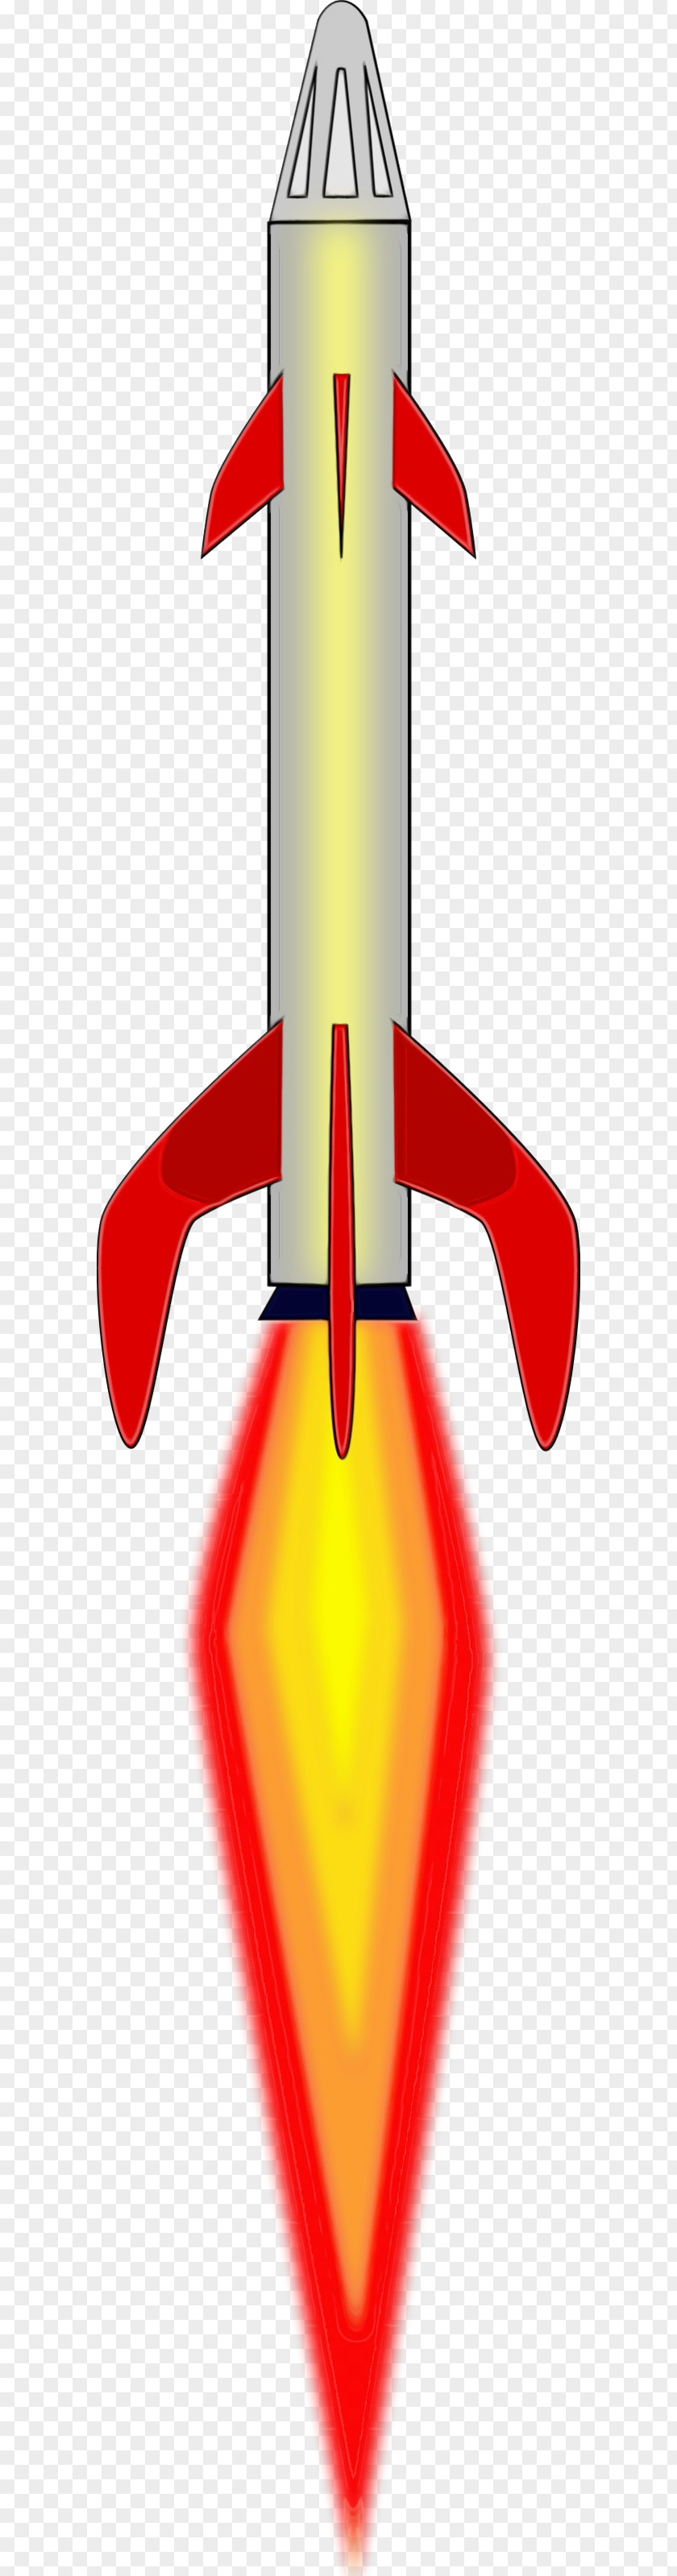 Corkscrew Barware Cartoon Rocket PNG